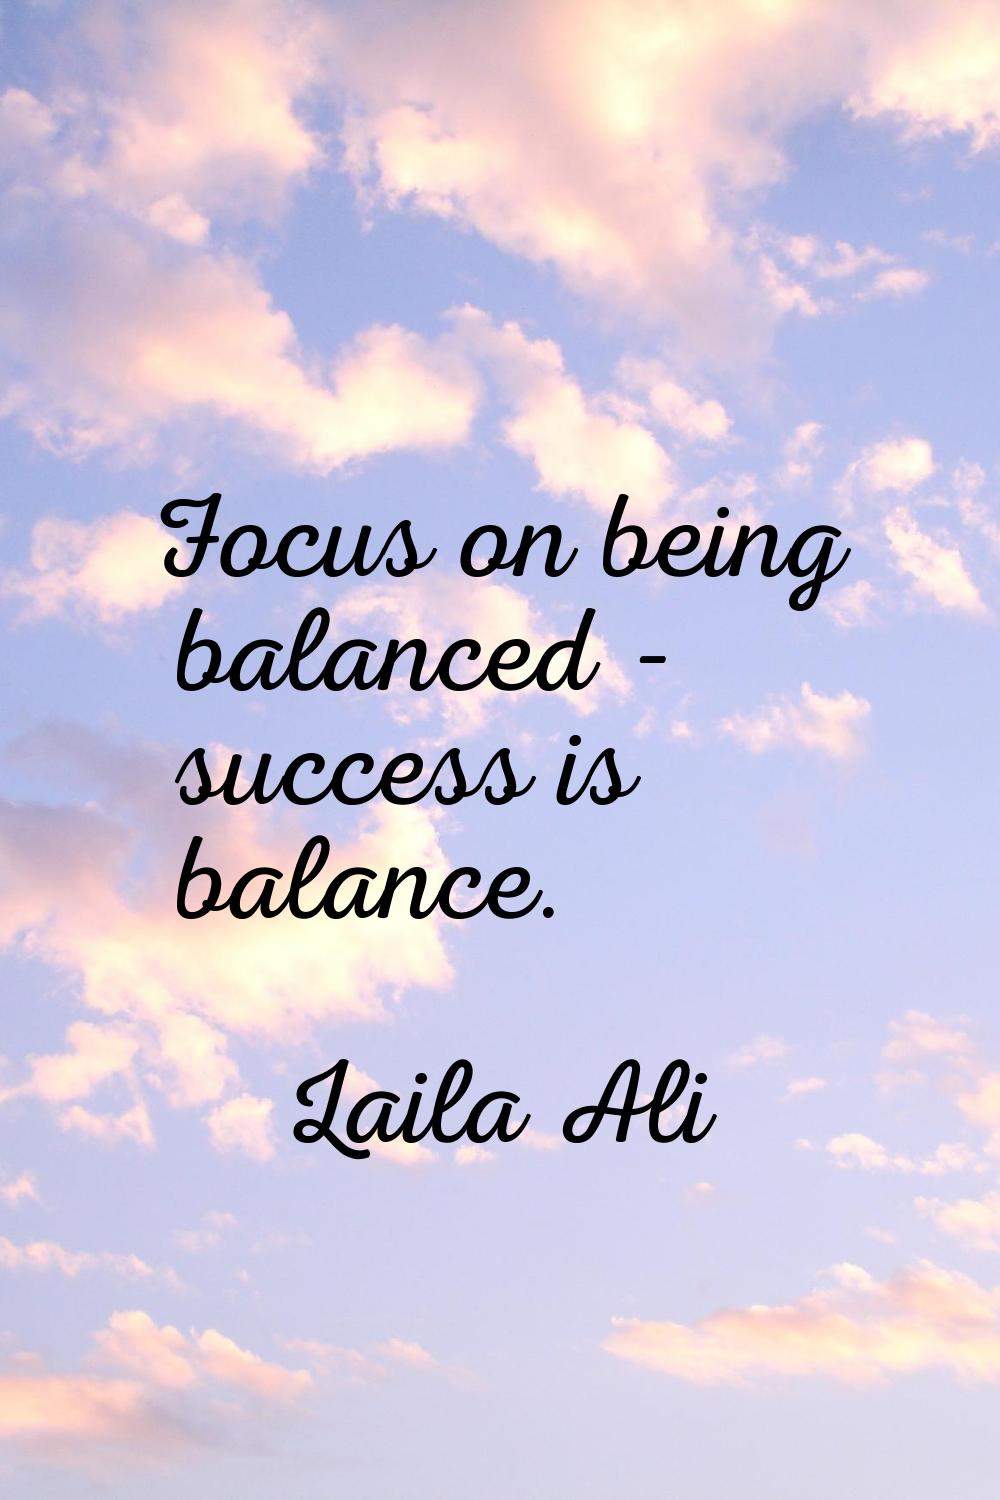 Focus on being balanced - success is balance.